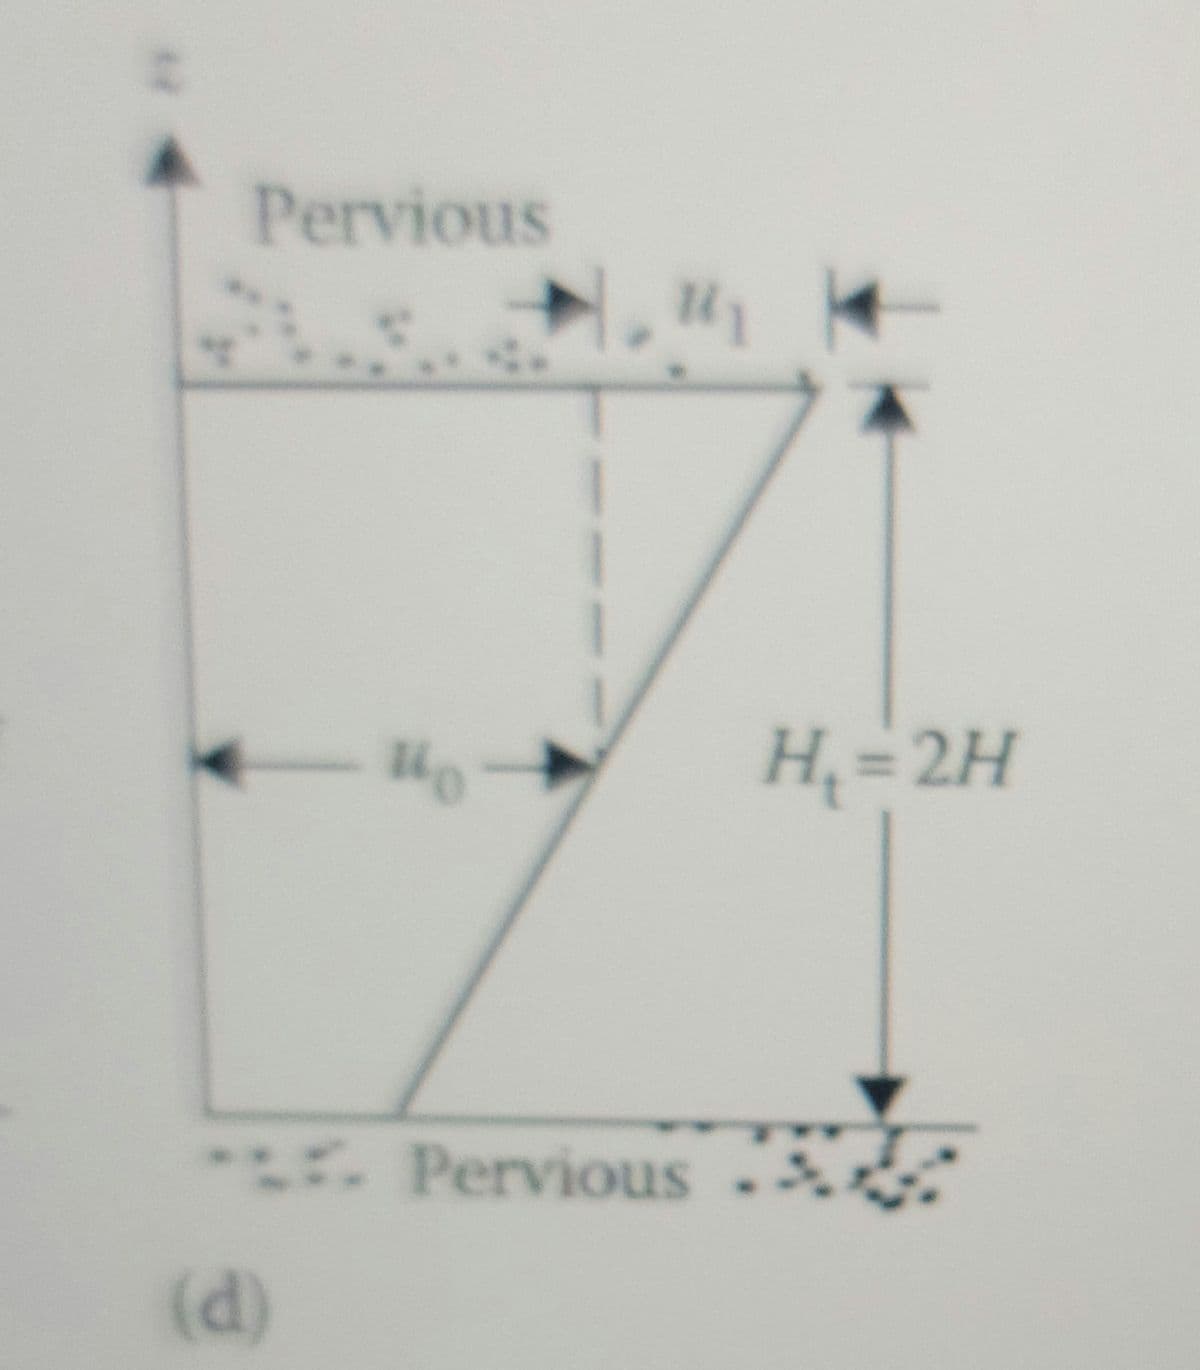 Pervious
-#o
(d)
*
11
H₂=2H
- Pervious ..